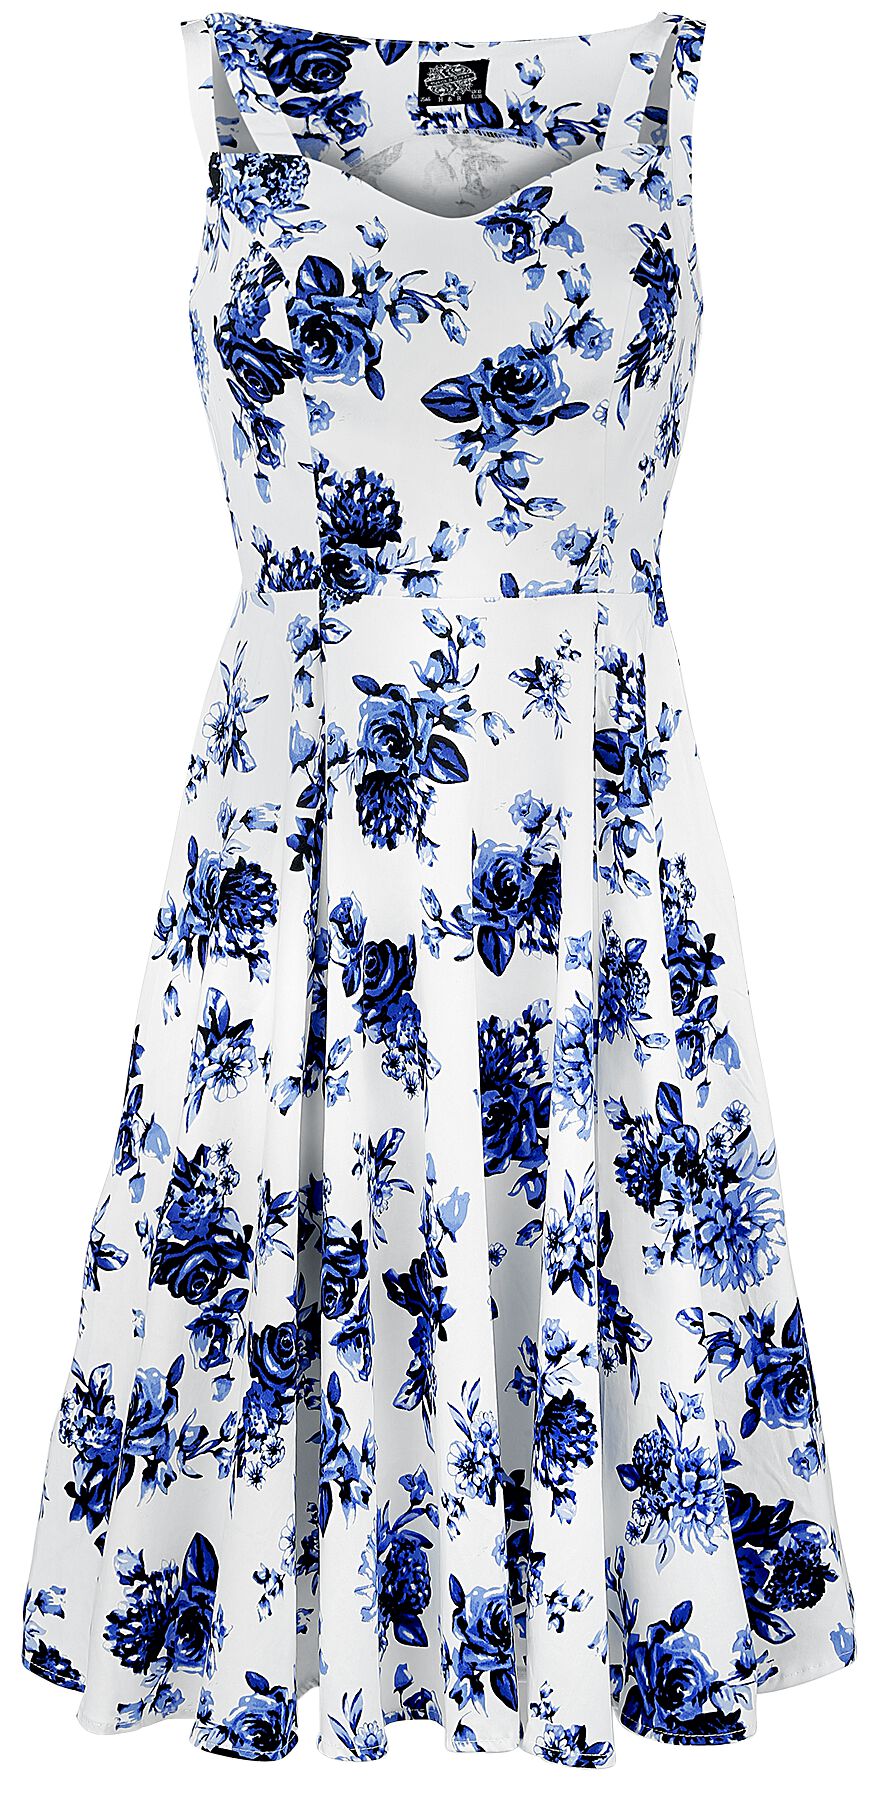 H&R London - Rockabilly Kleid knielang - Blue Rosaceae Swing Dress - S bis 3XL - für Damen - Größe XXL - multicolor